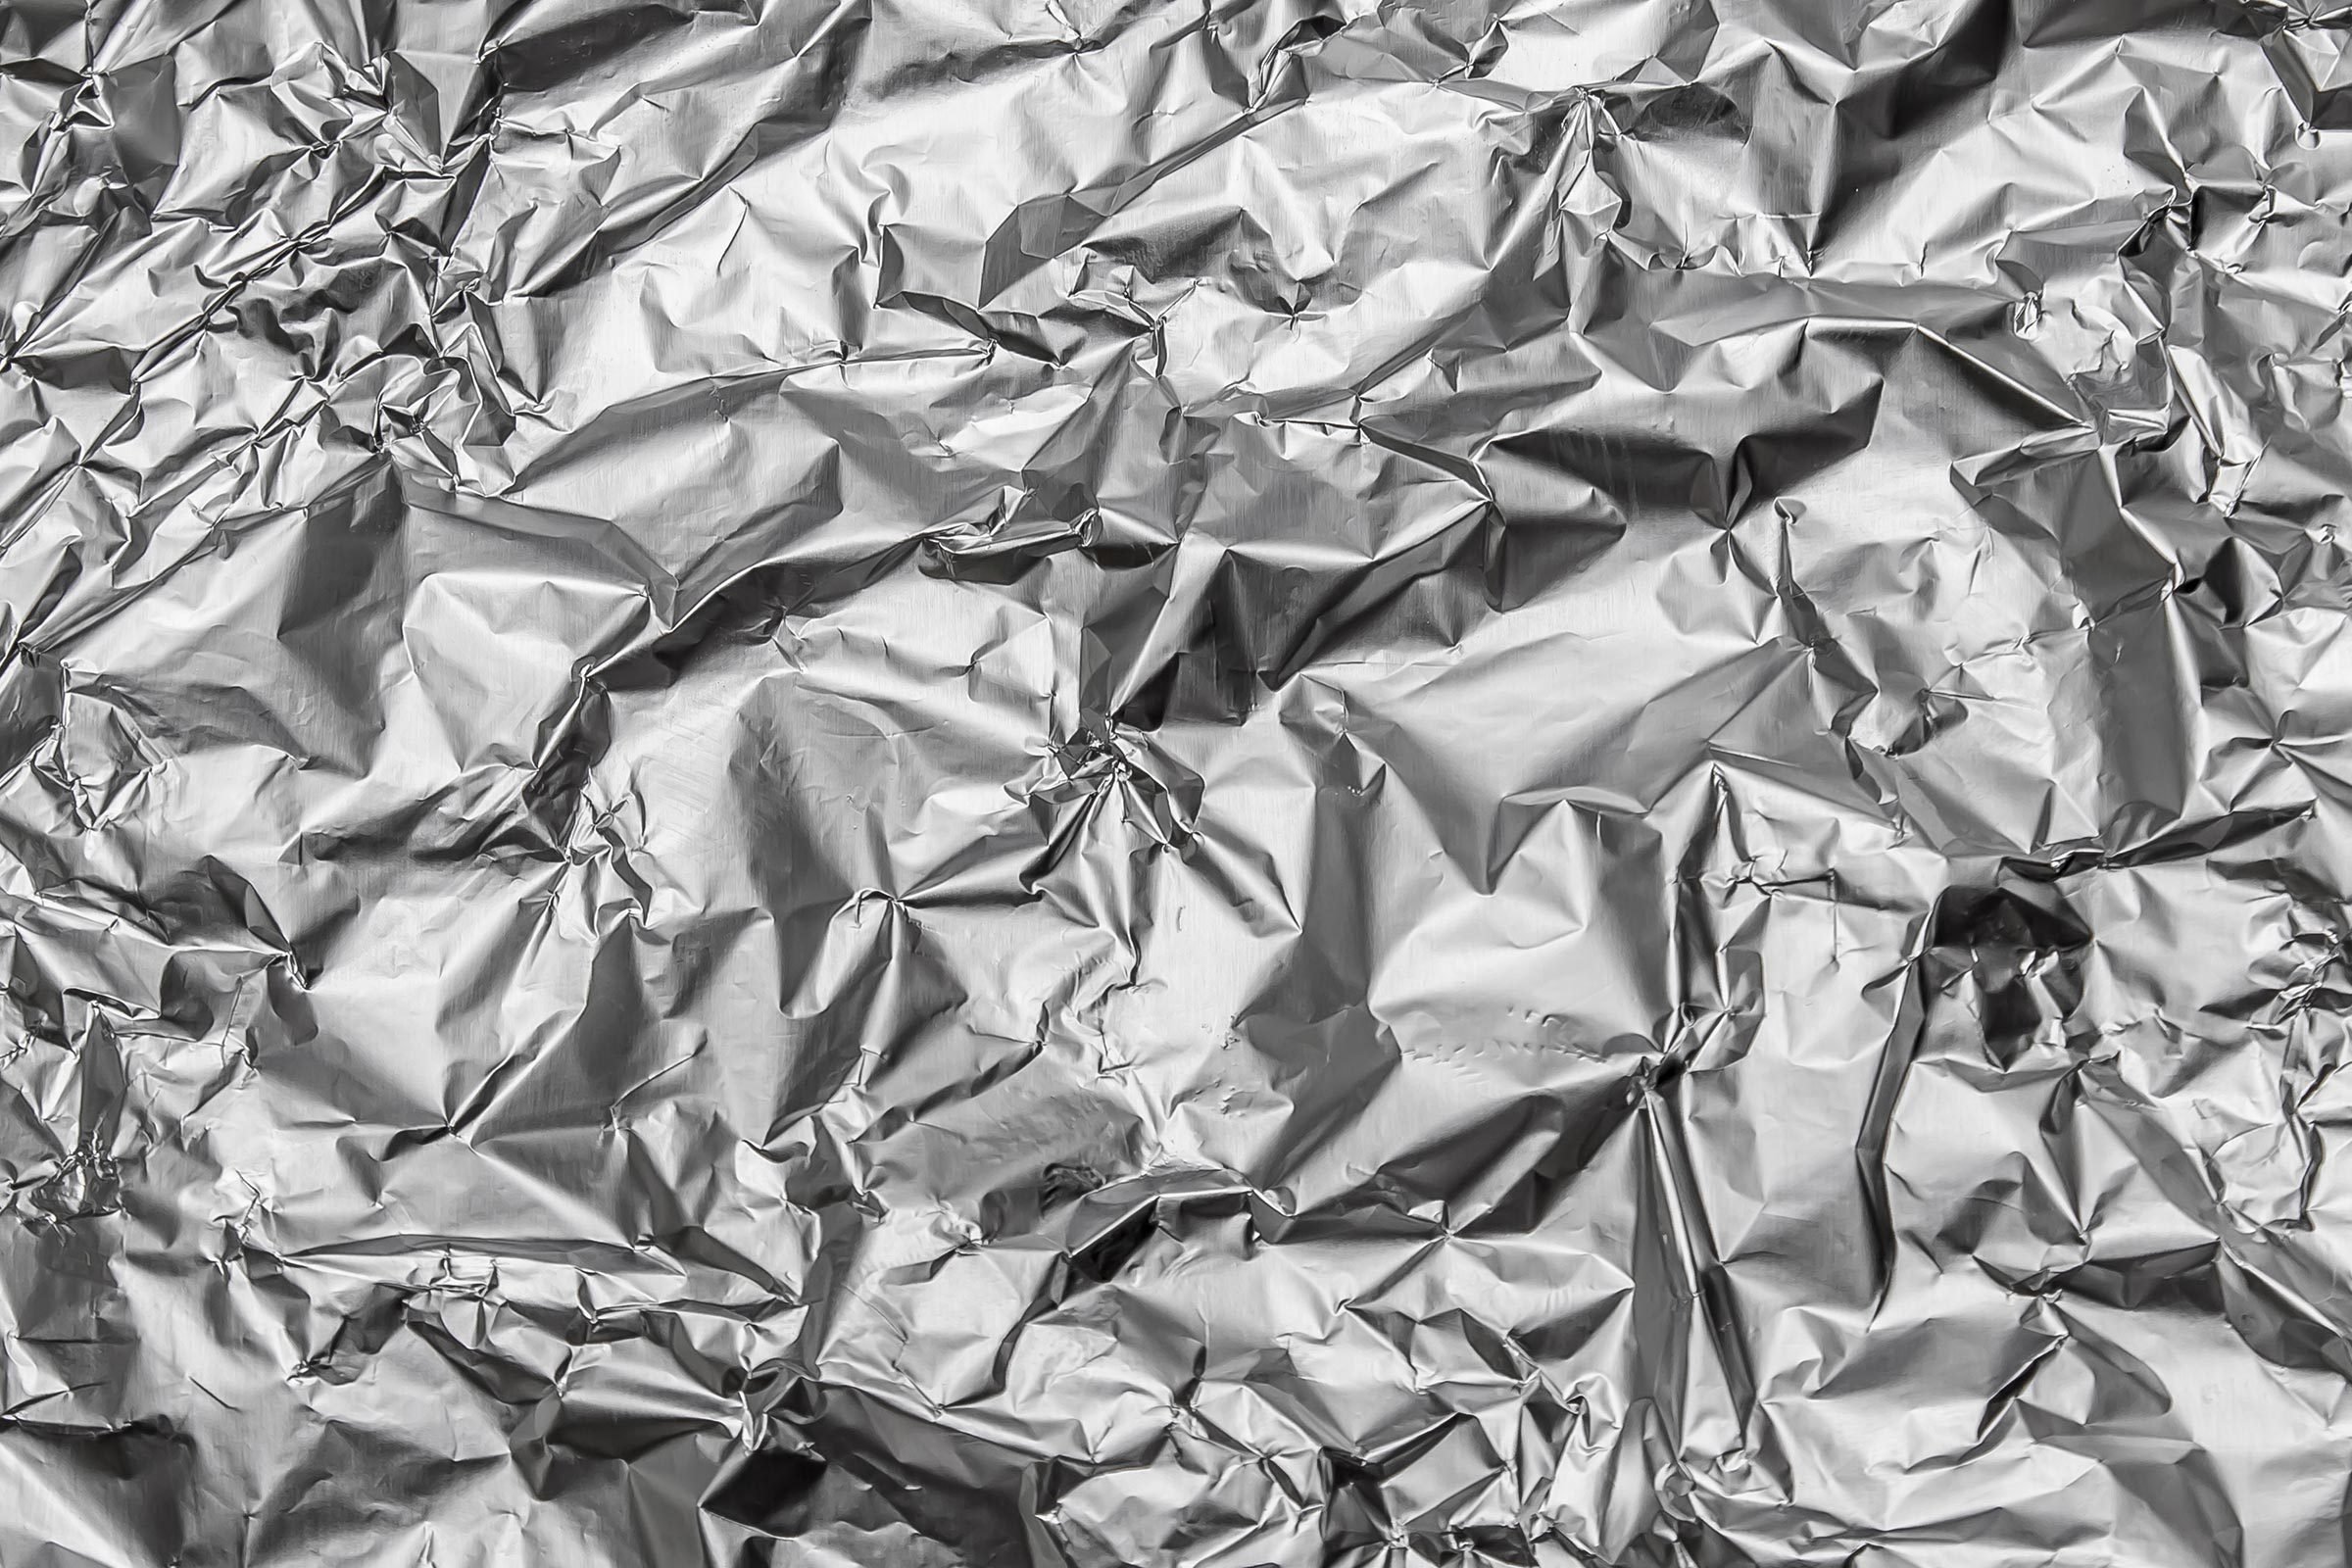 45 Aluminum Foil Uses You'll Wish You Knew Sooner | Reader's Digest